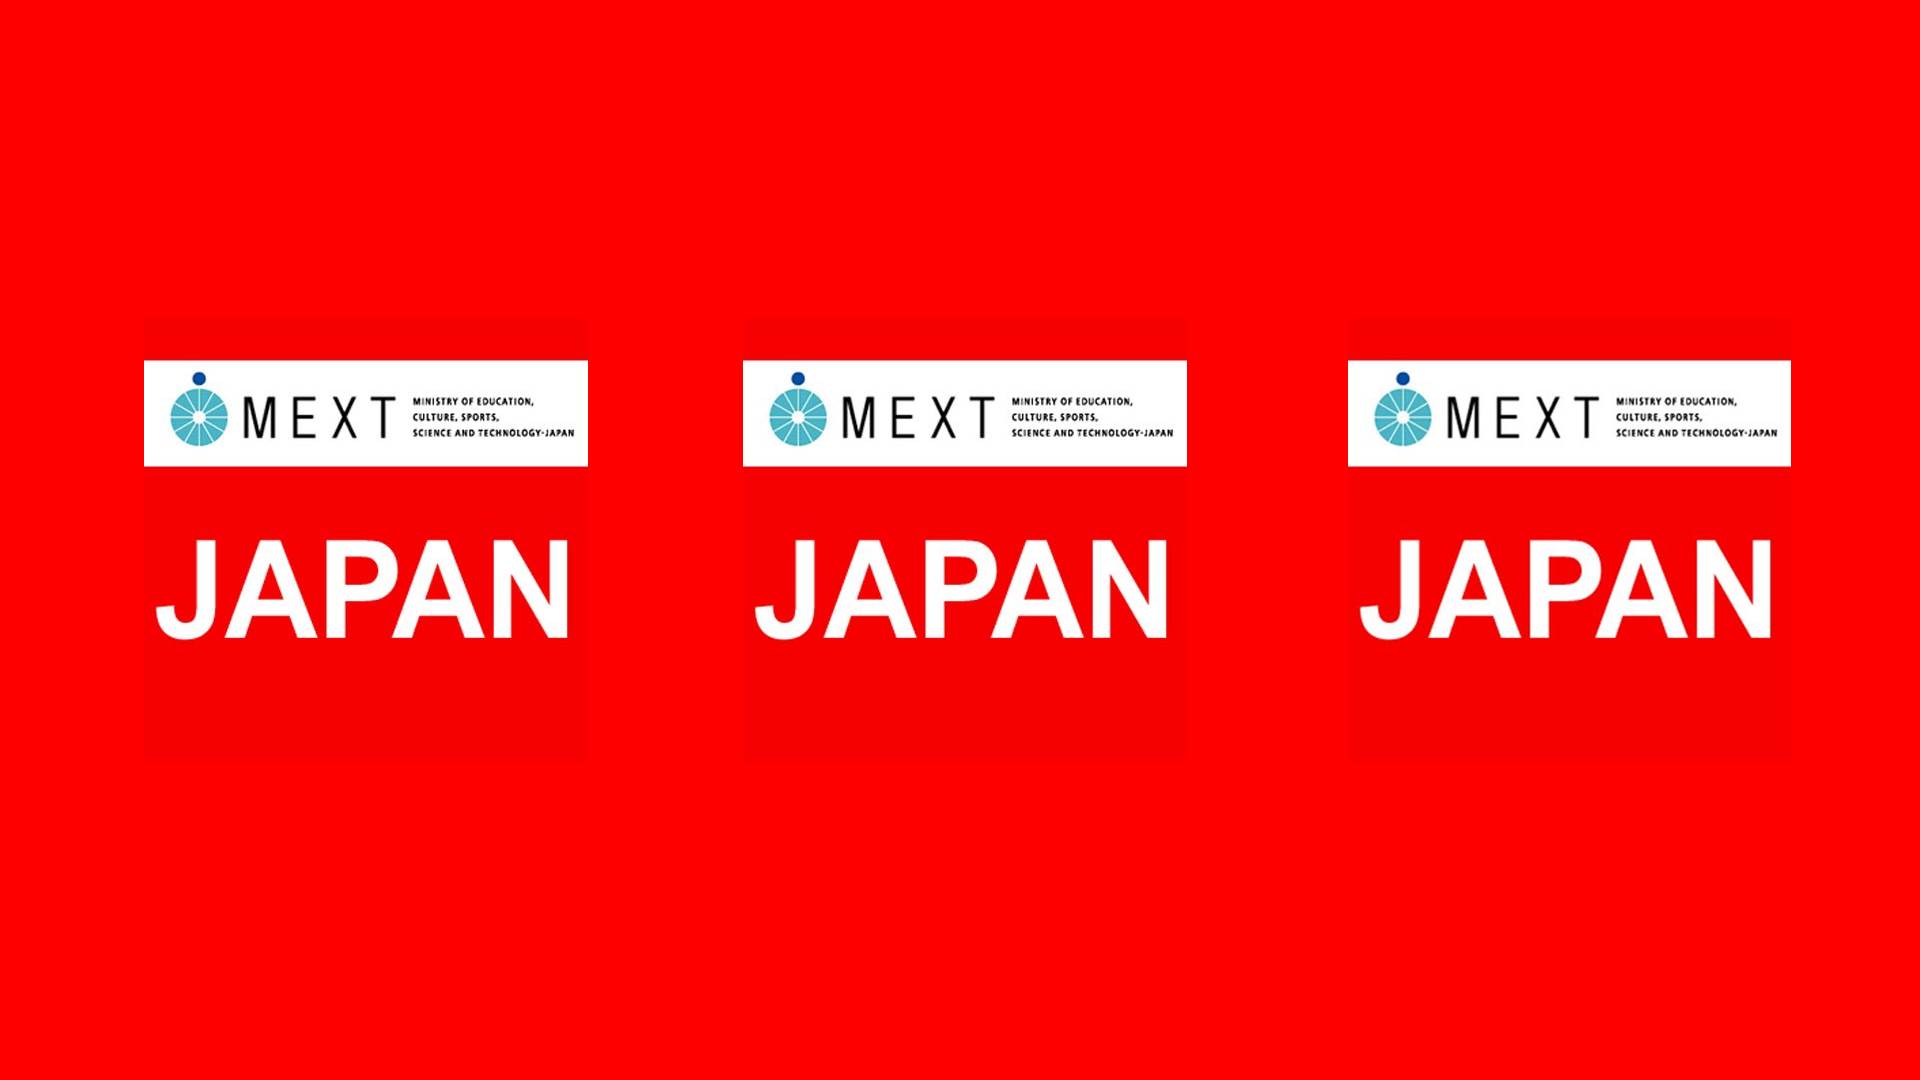 Japanese Government (Monbukagakusho: MEXT) Scholarship Program 2020